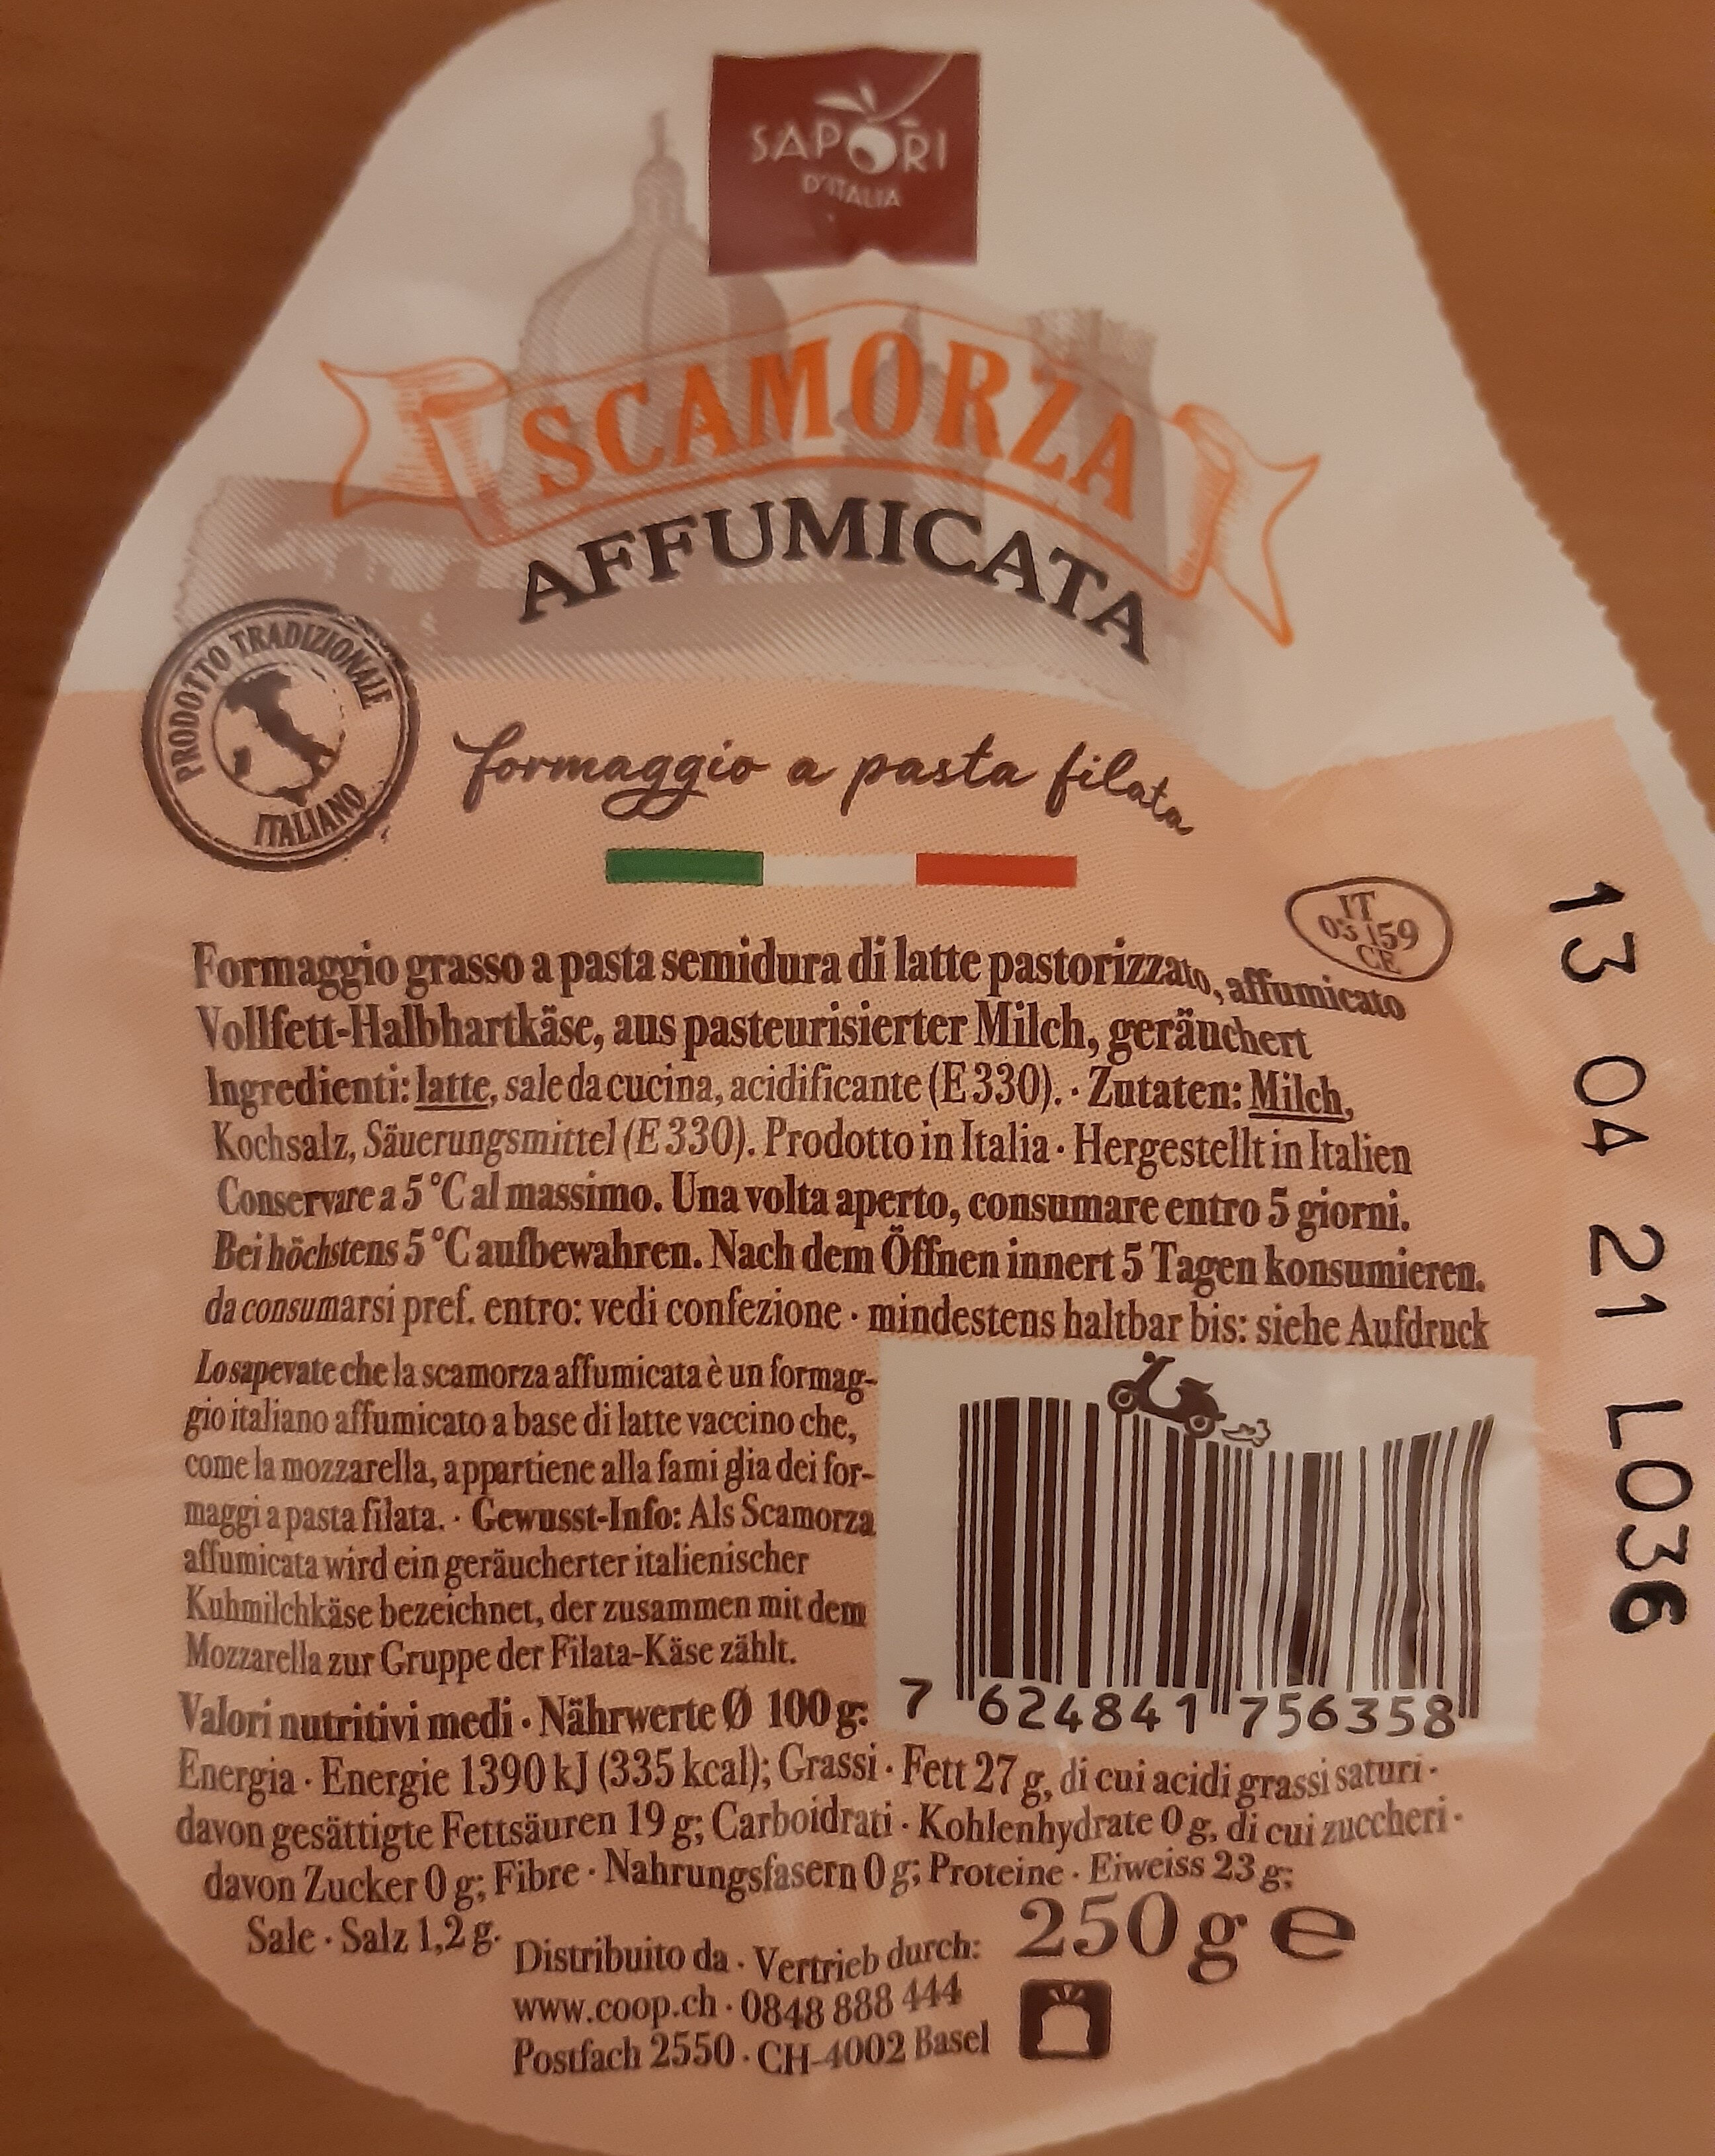 Scamorza affumicata - Product - it